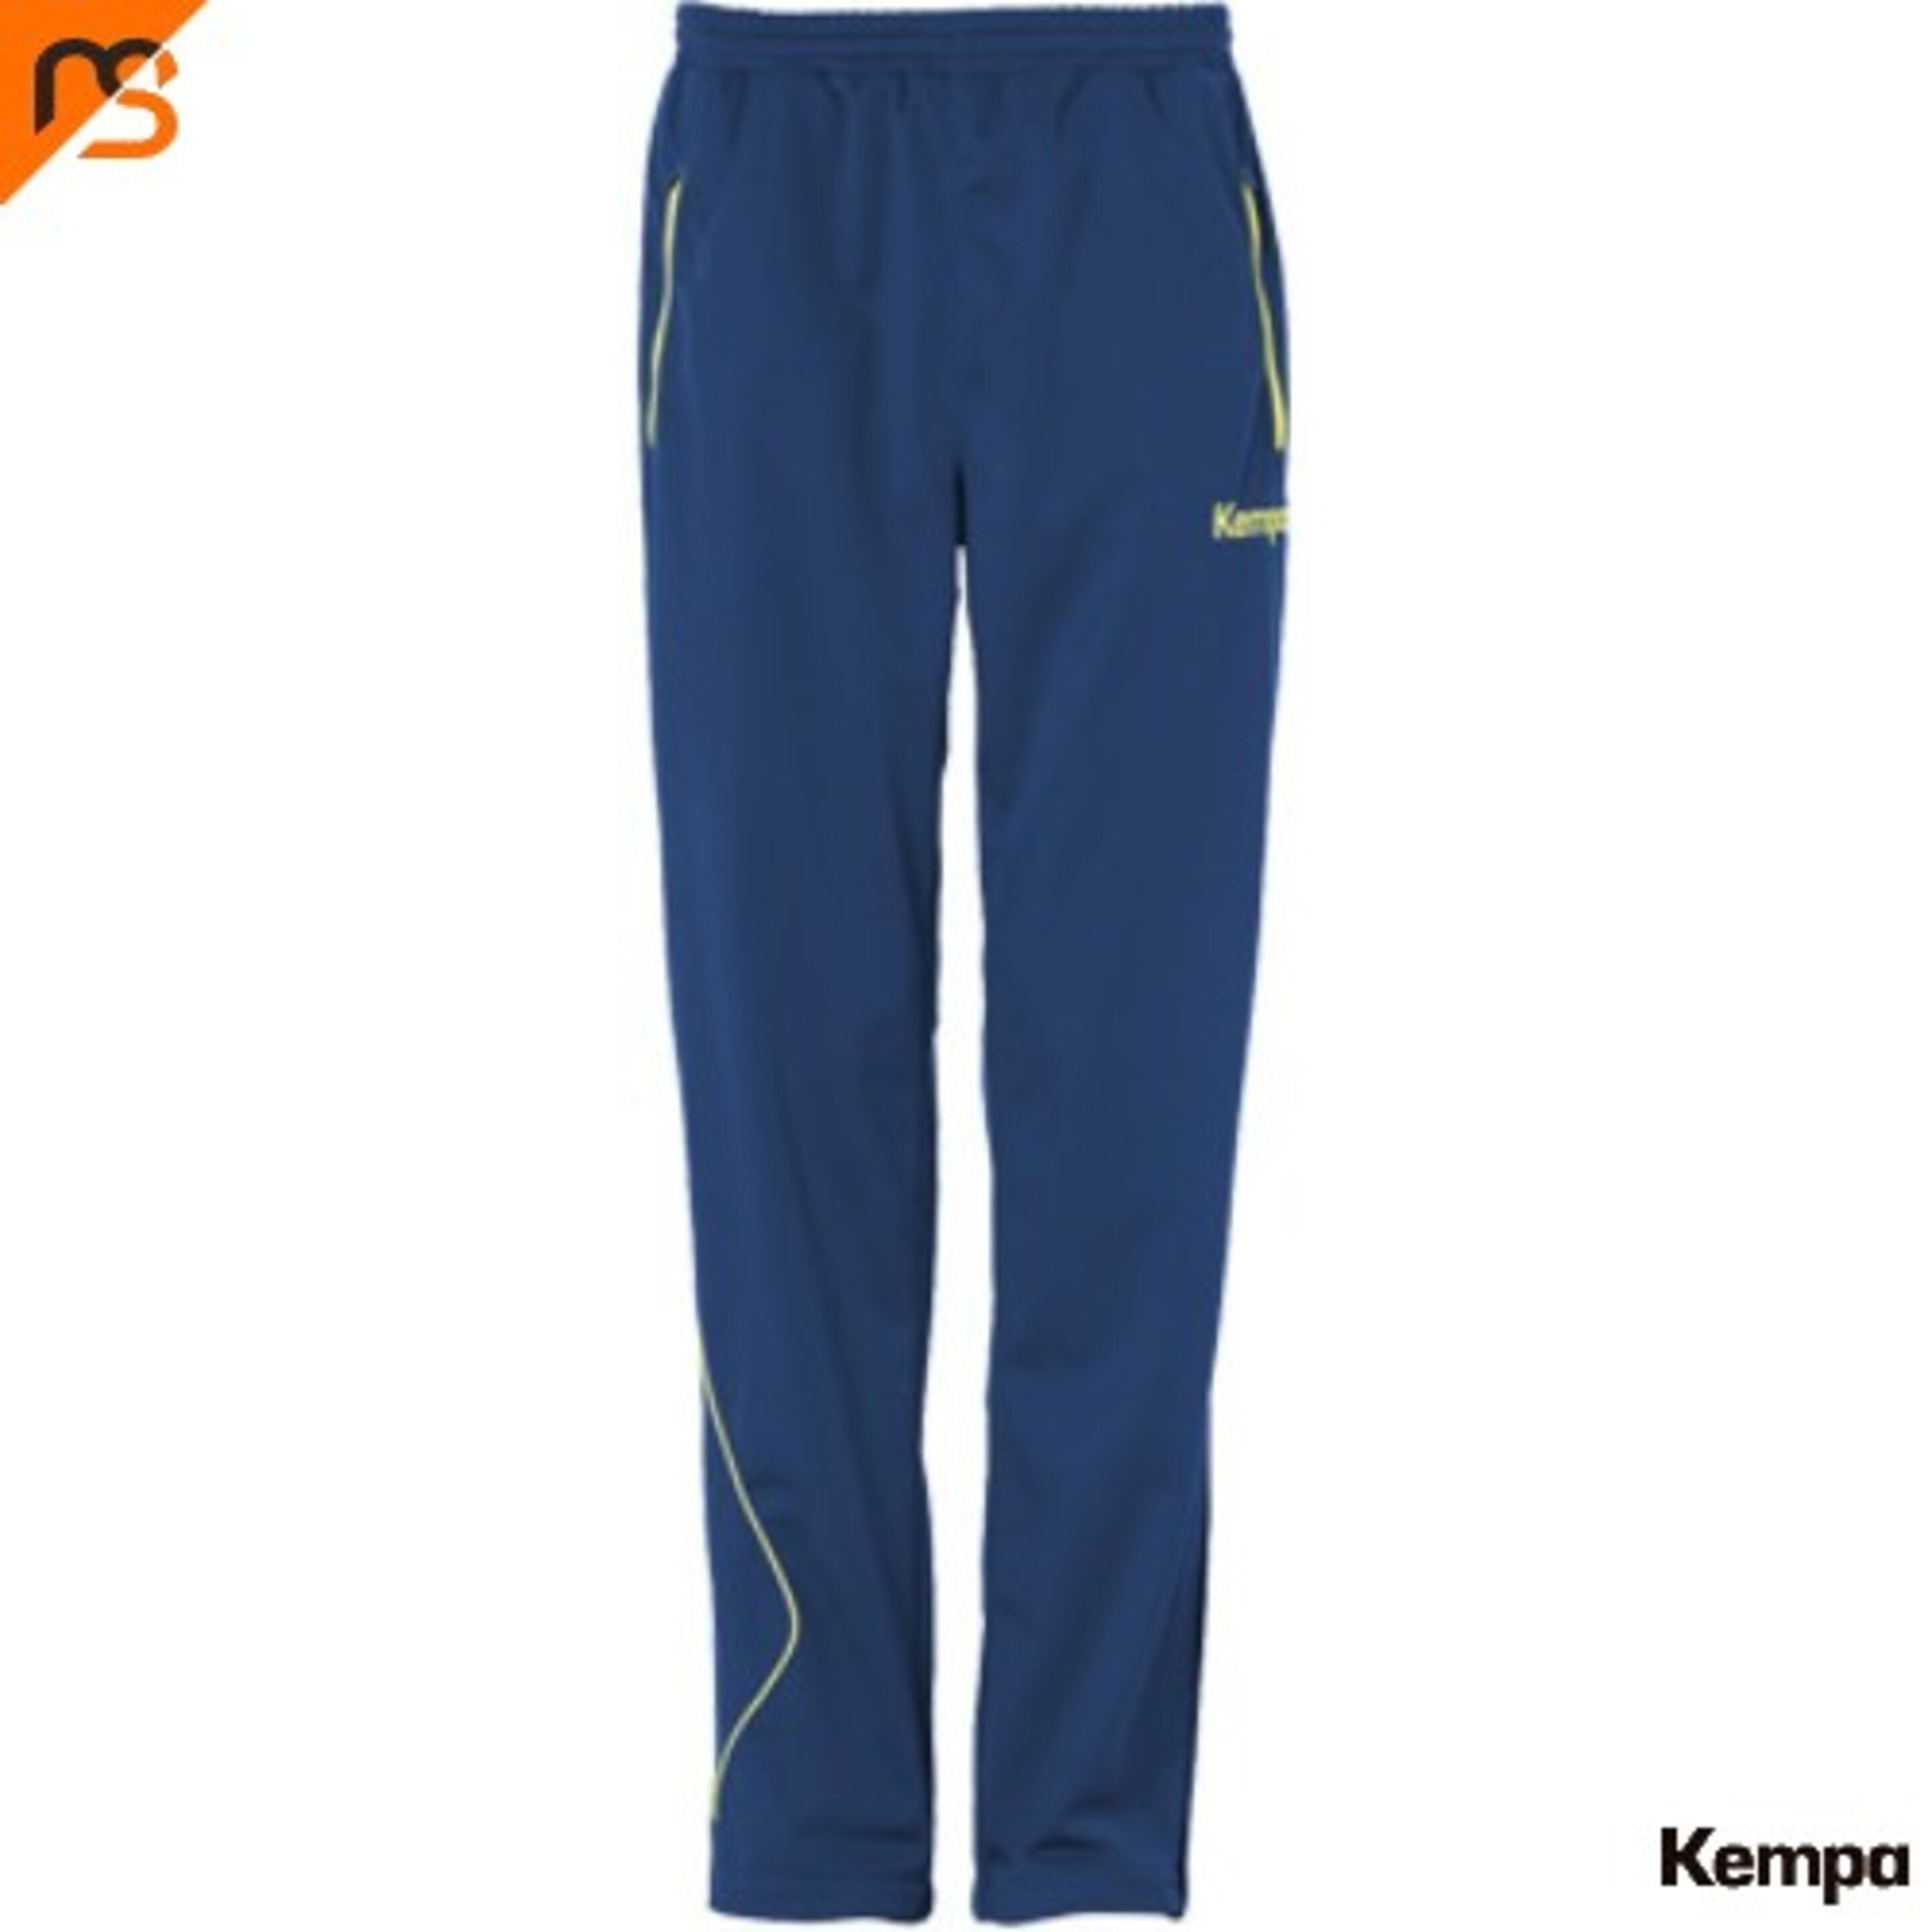 Curve Classic Pantalones Azul Deep/amarillo Fluor Kempa - azul-oscuro - 